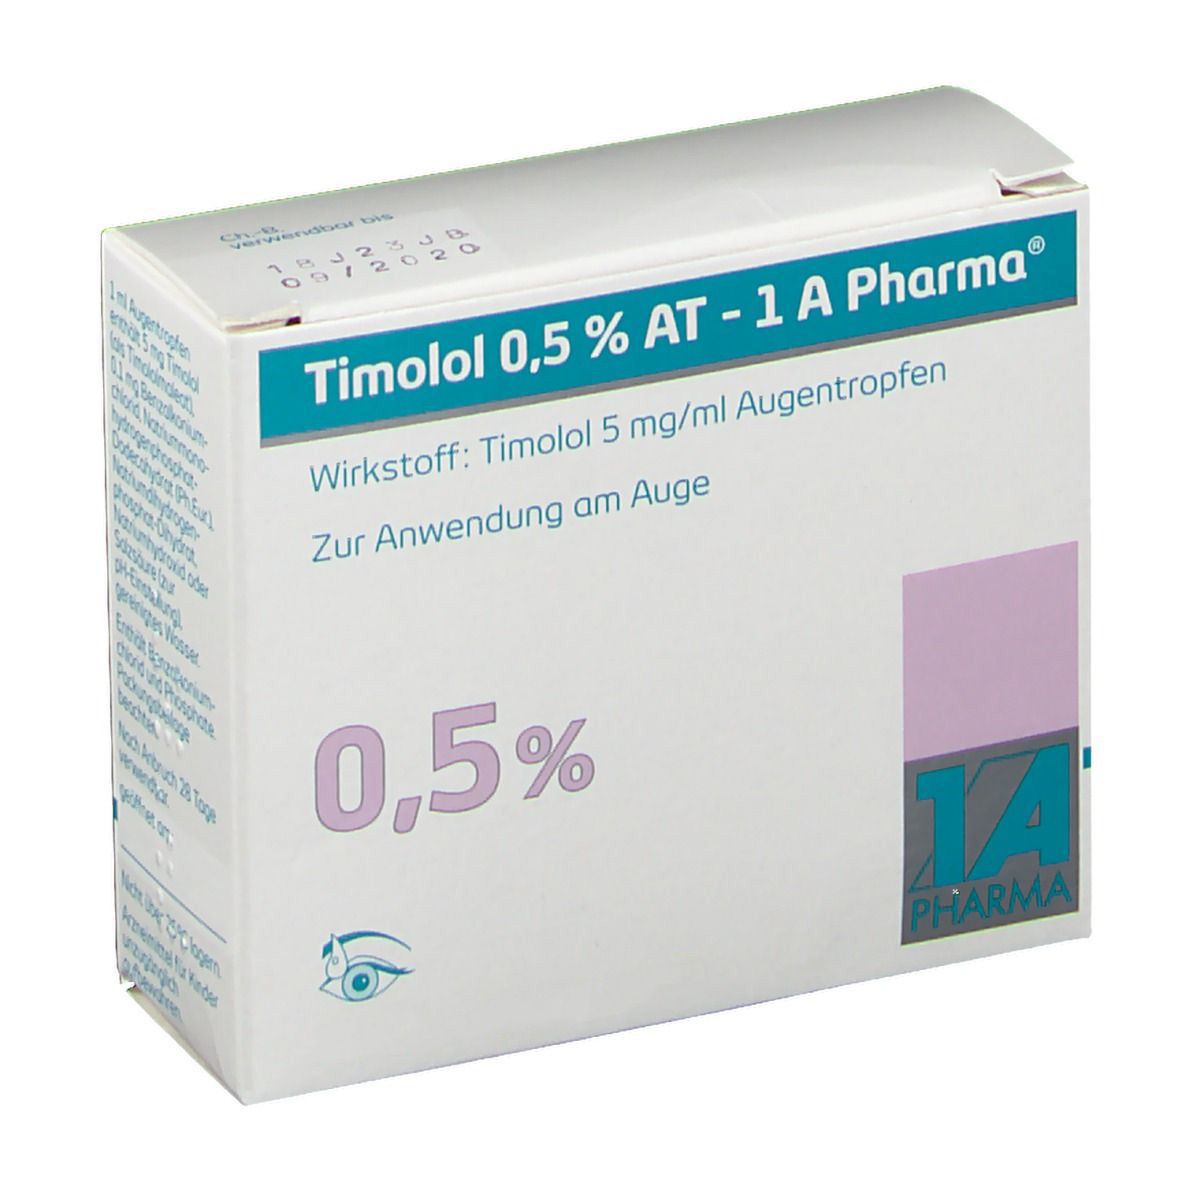 Timolol 0,5% AT - 1 A Pharma®